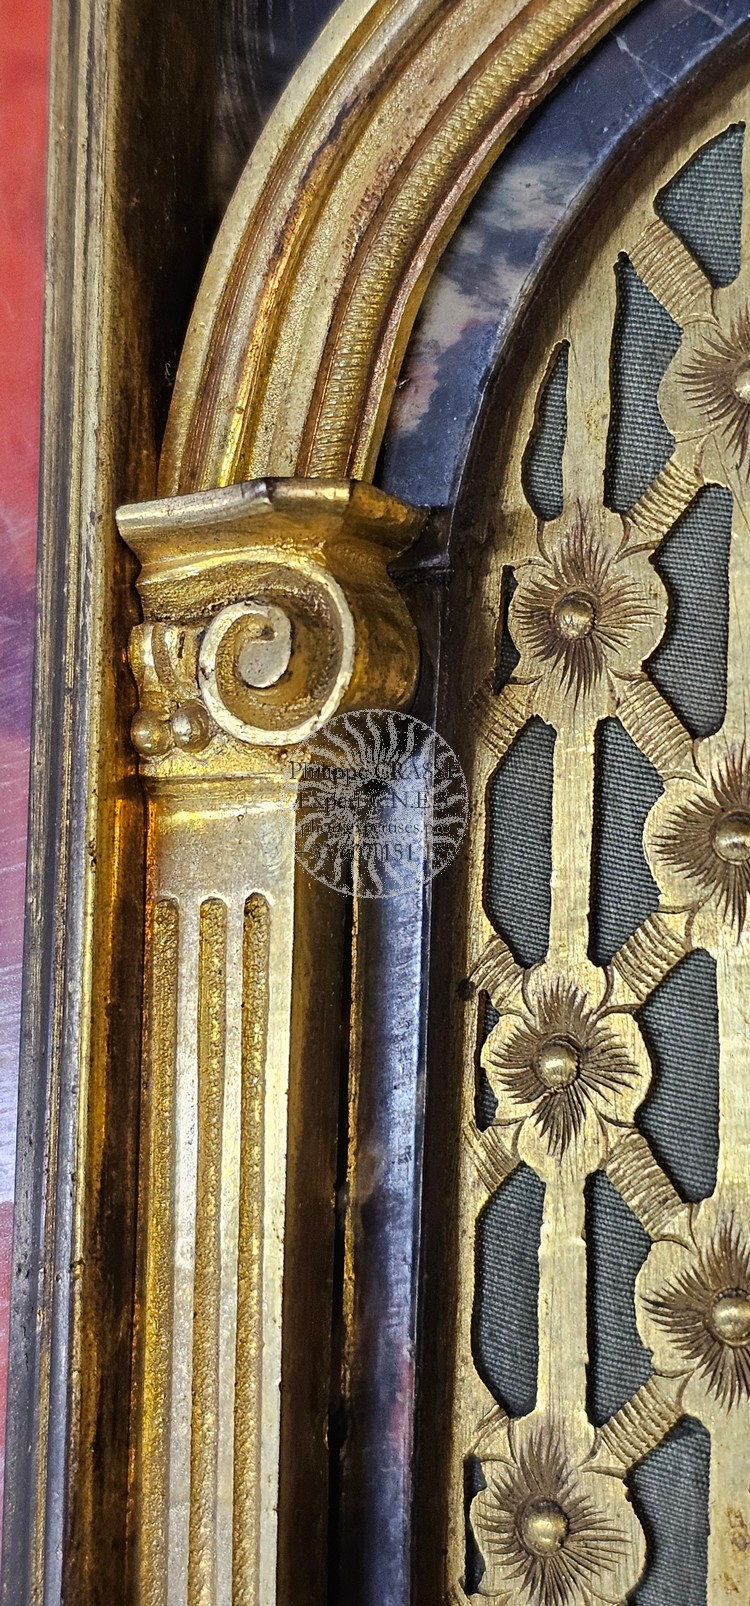 orgue cheminee detail 1